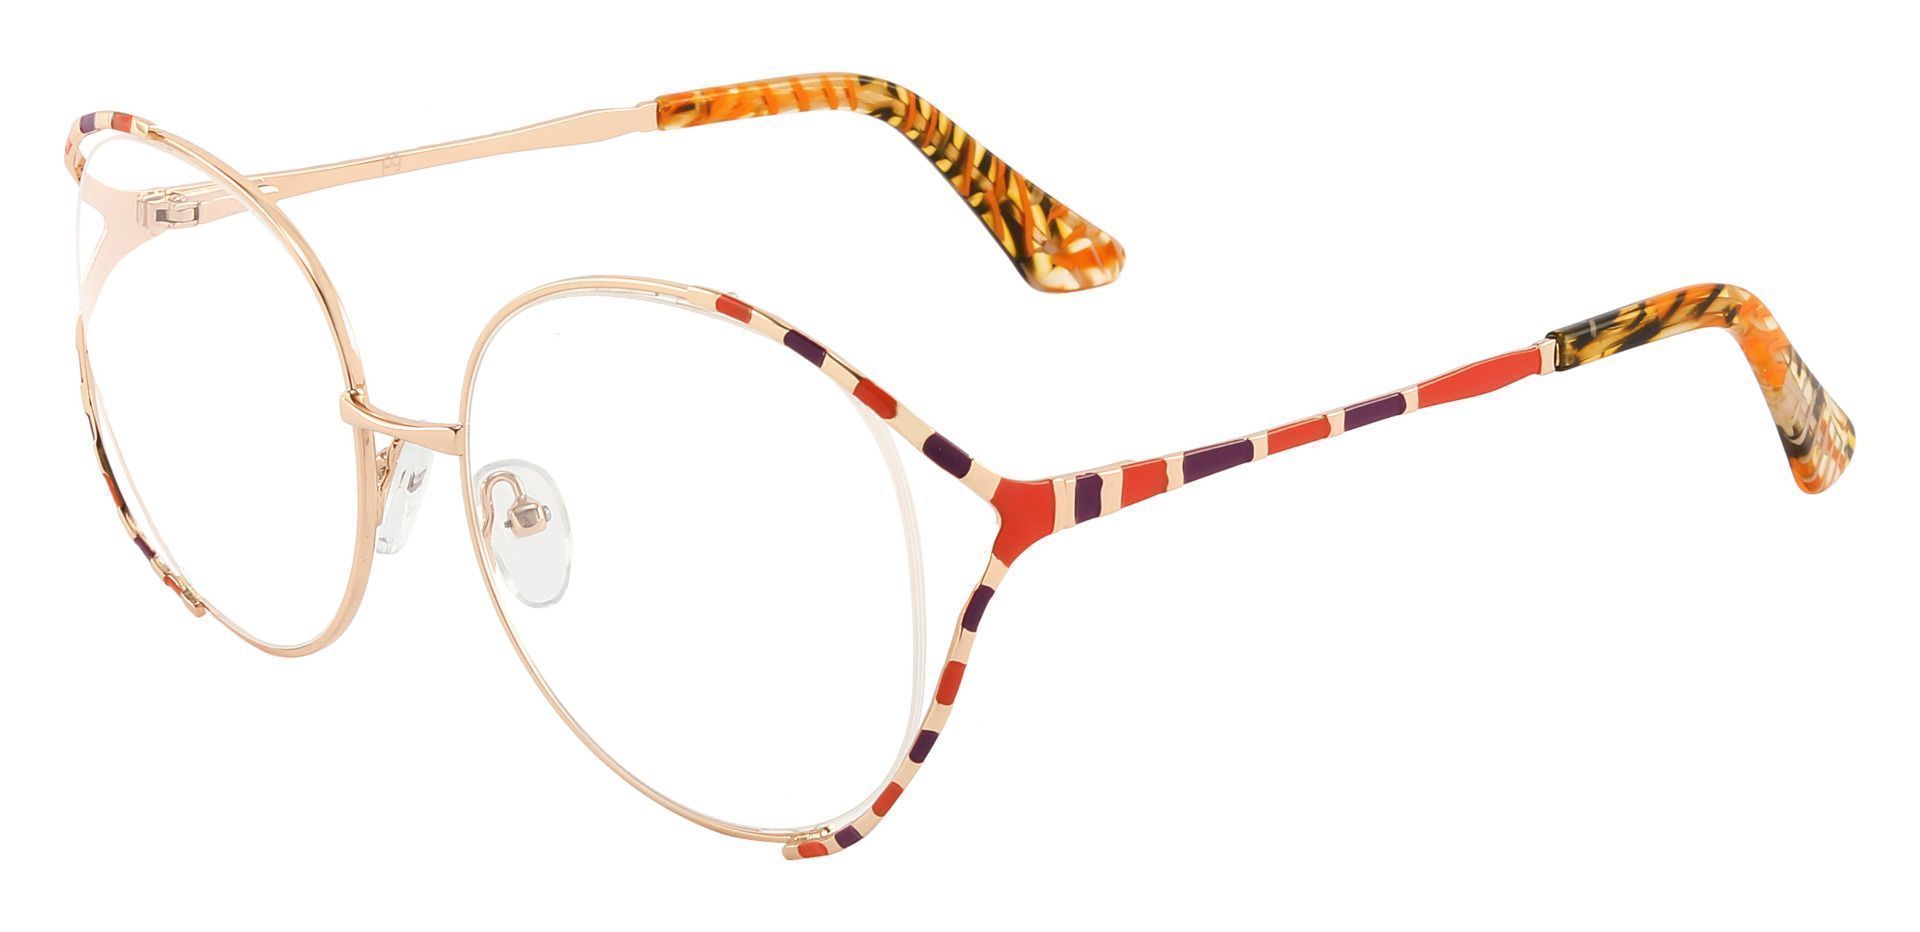 Dorothy Oval Progressive Glasses - Brown